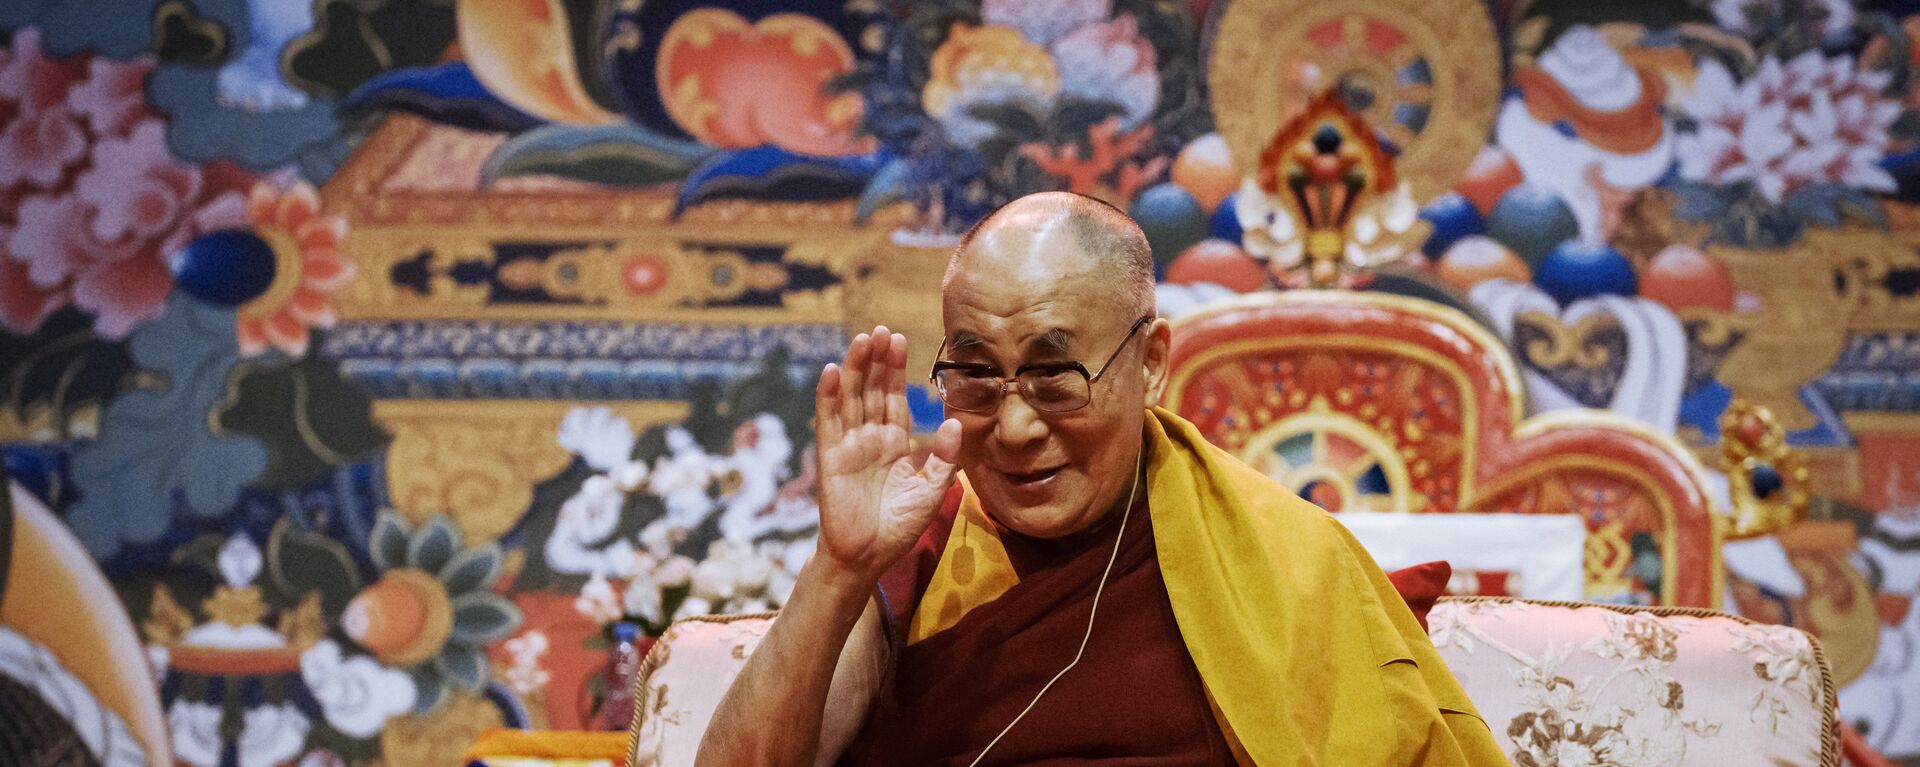 Далай-лама XIV провел лекцию в Риге - Sputnik Молдова, 1920, 22.04.2021